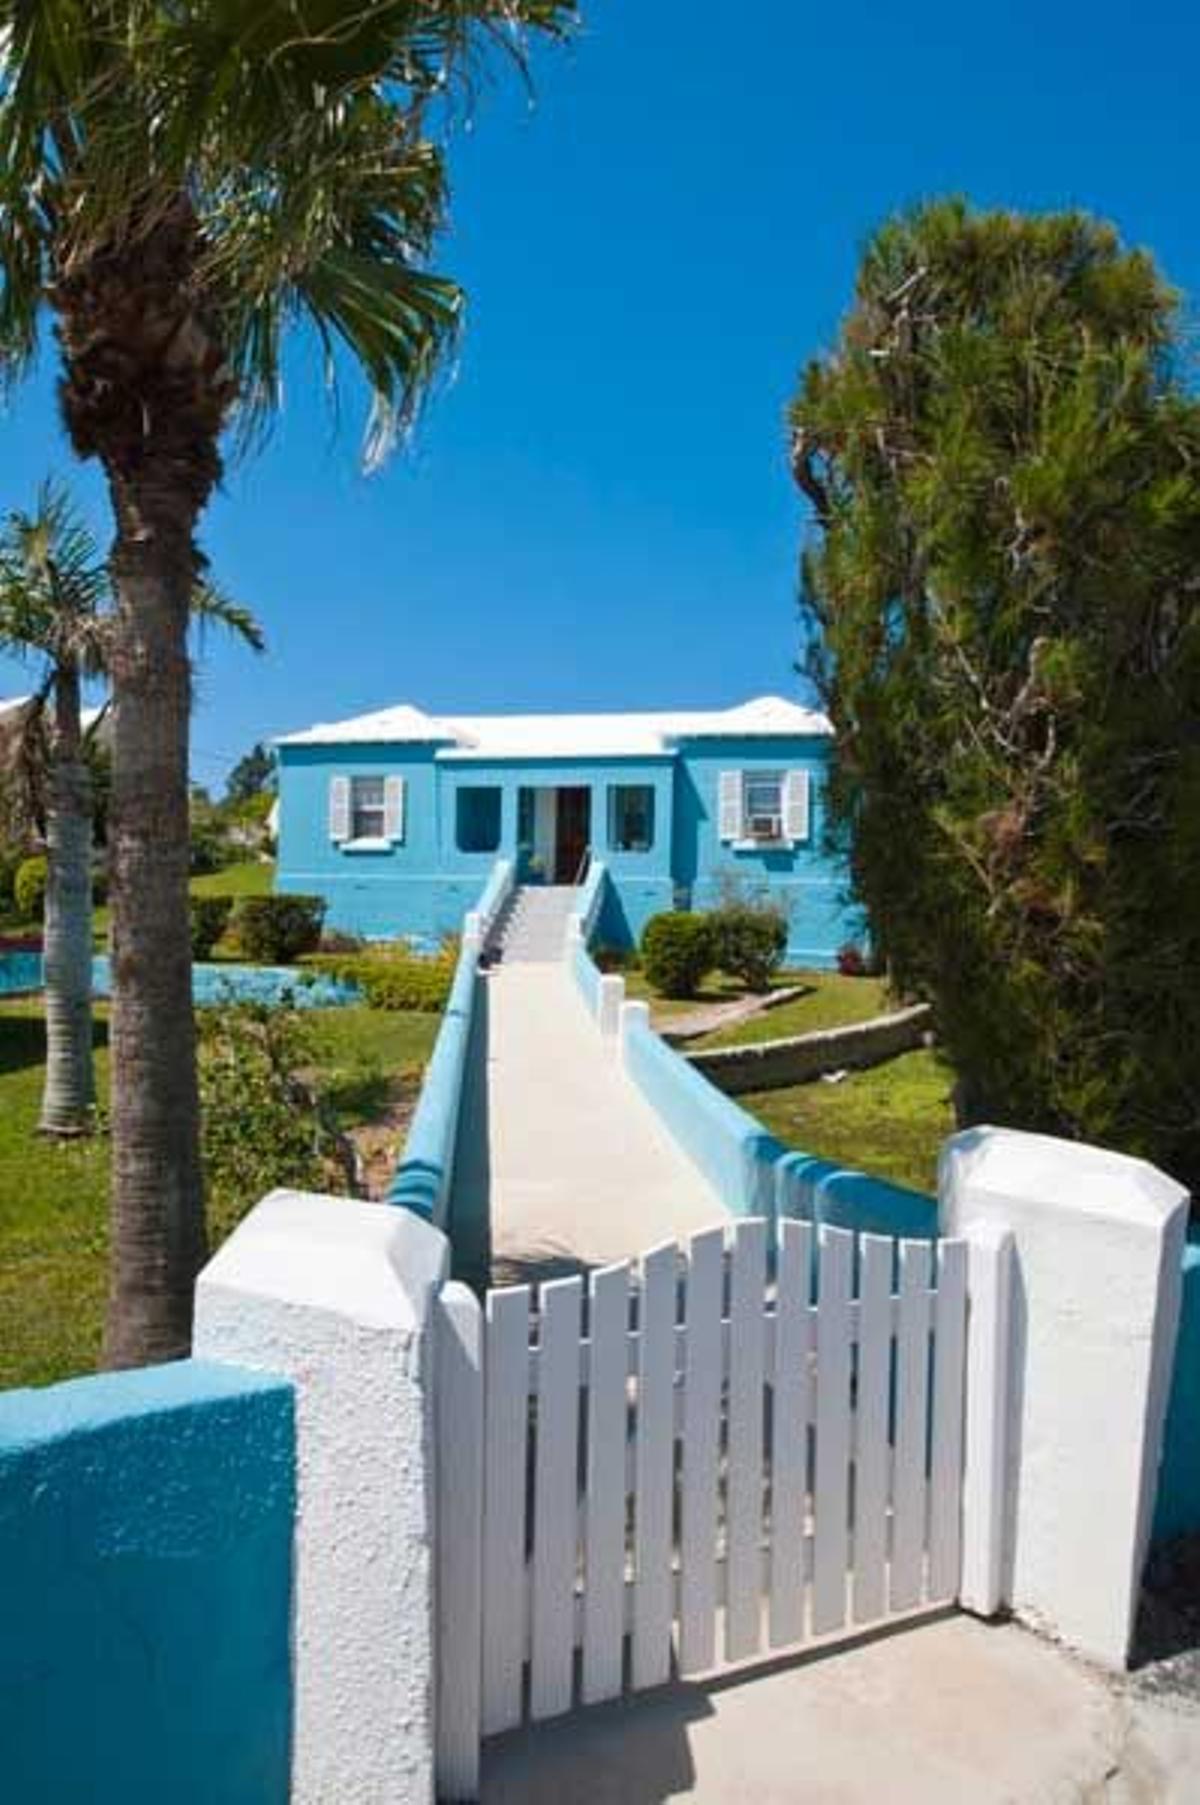 Casa típica en la isla de Saint George.